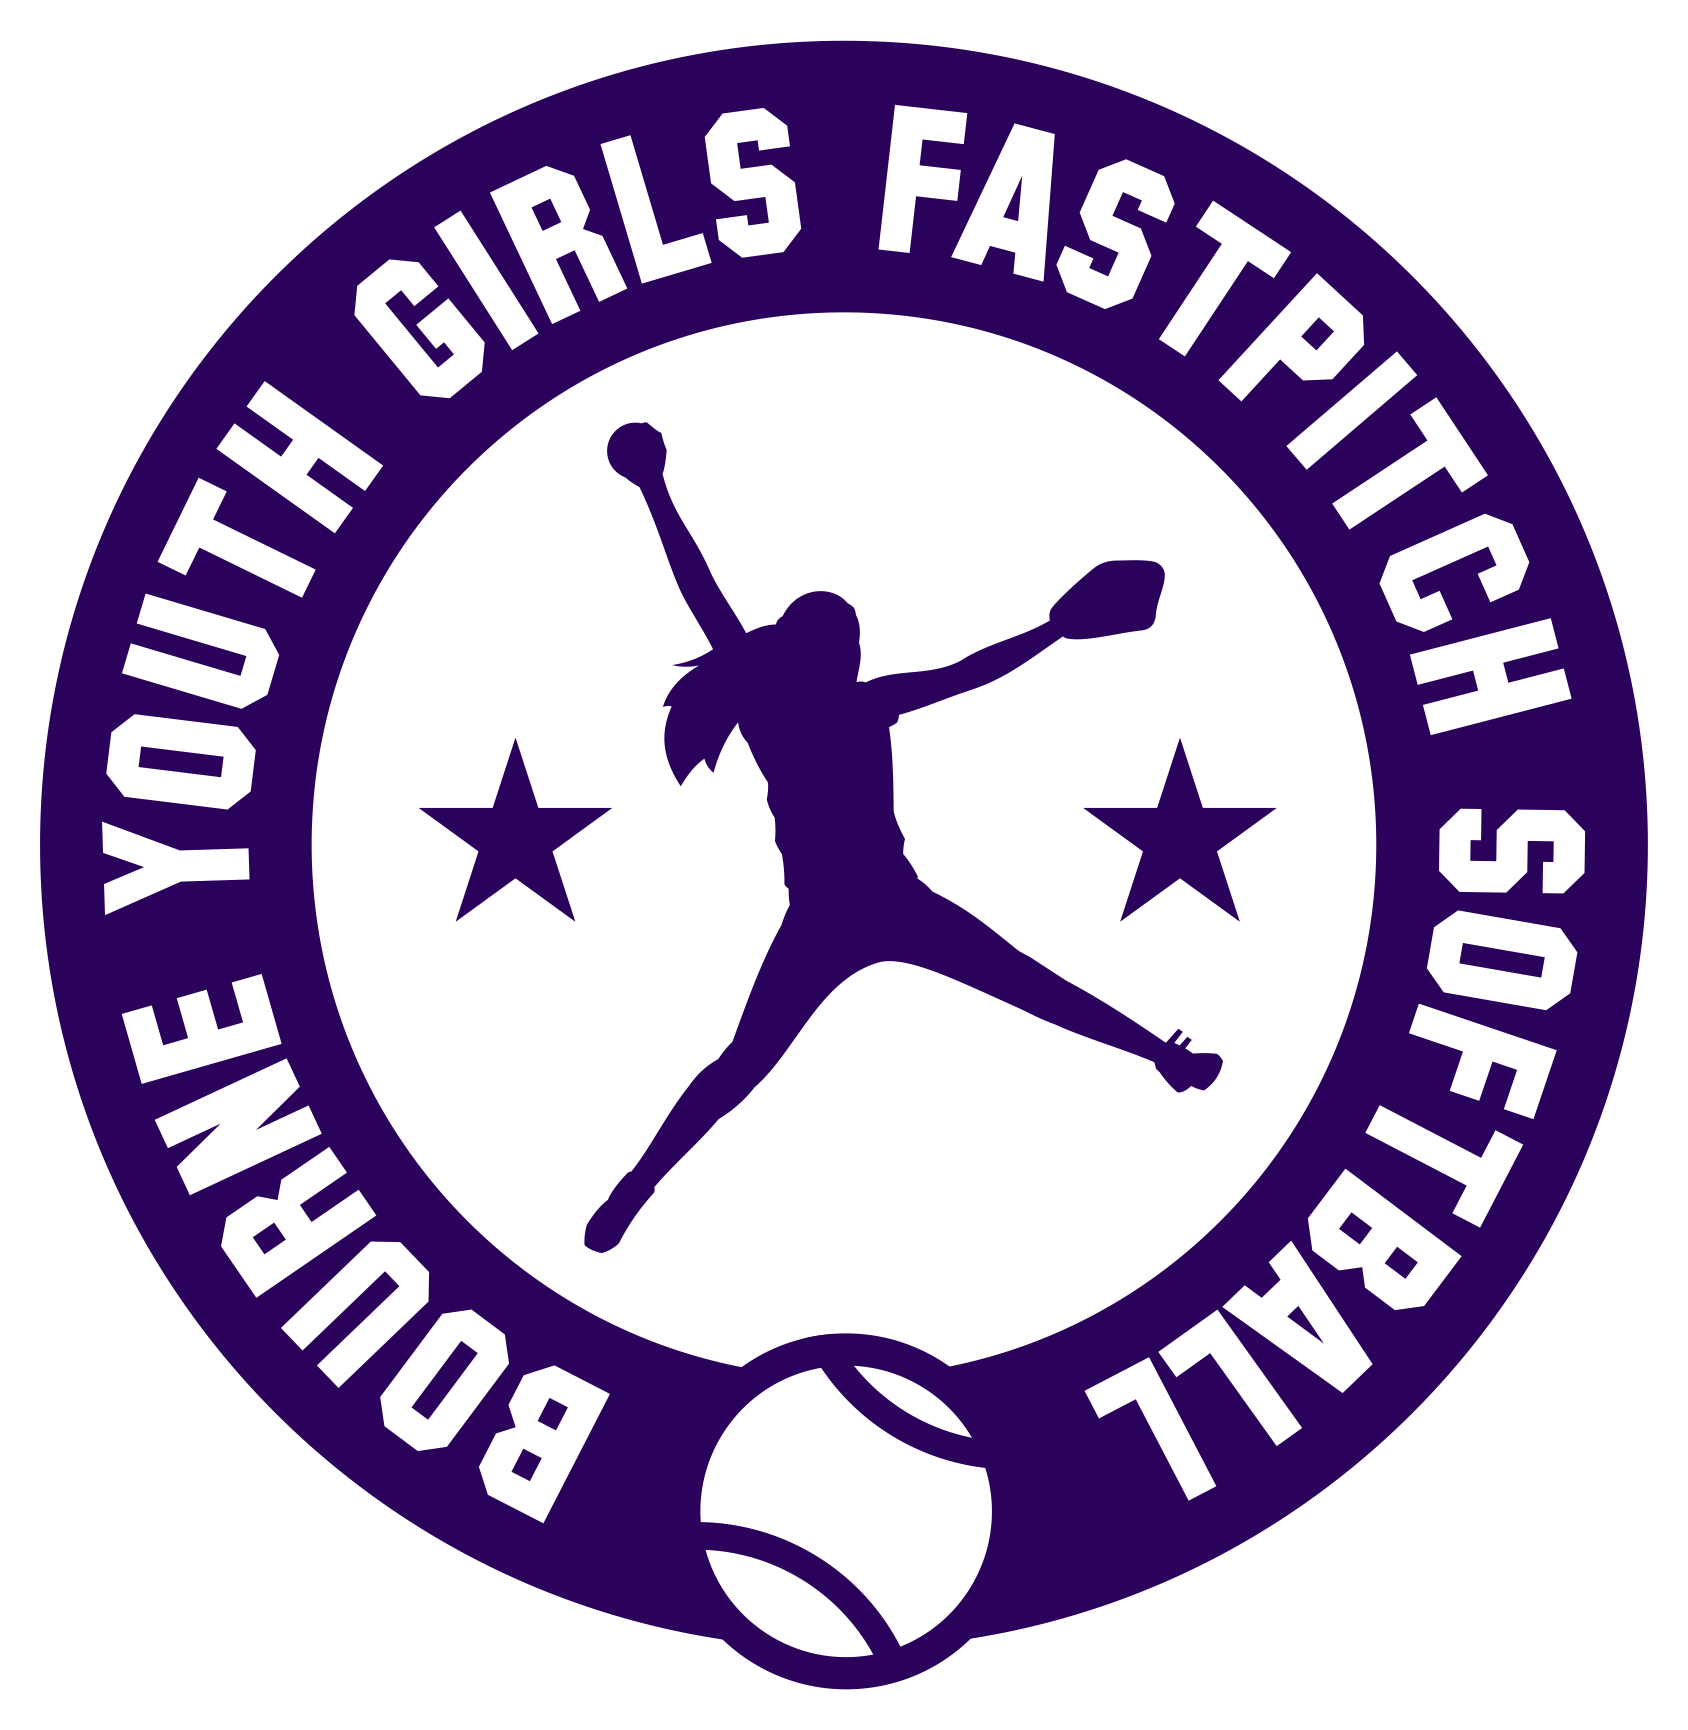 Bourne Youth Girls Fastpitch Softball Logo